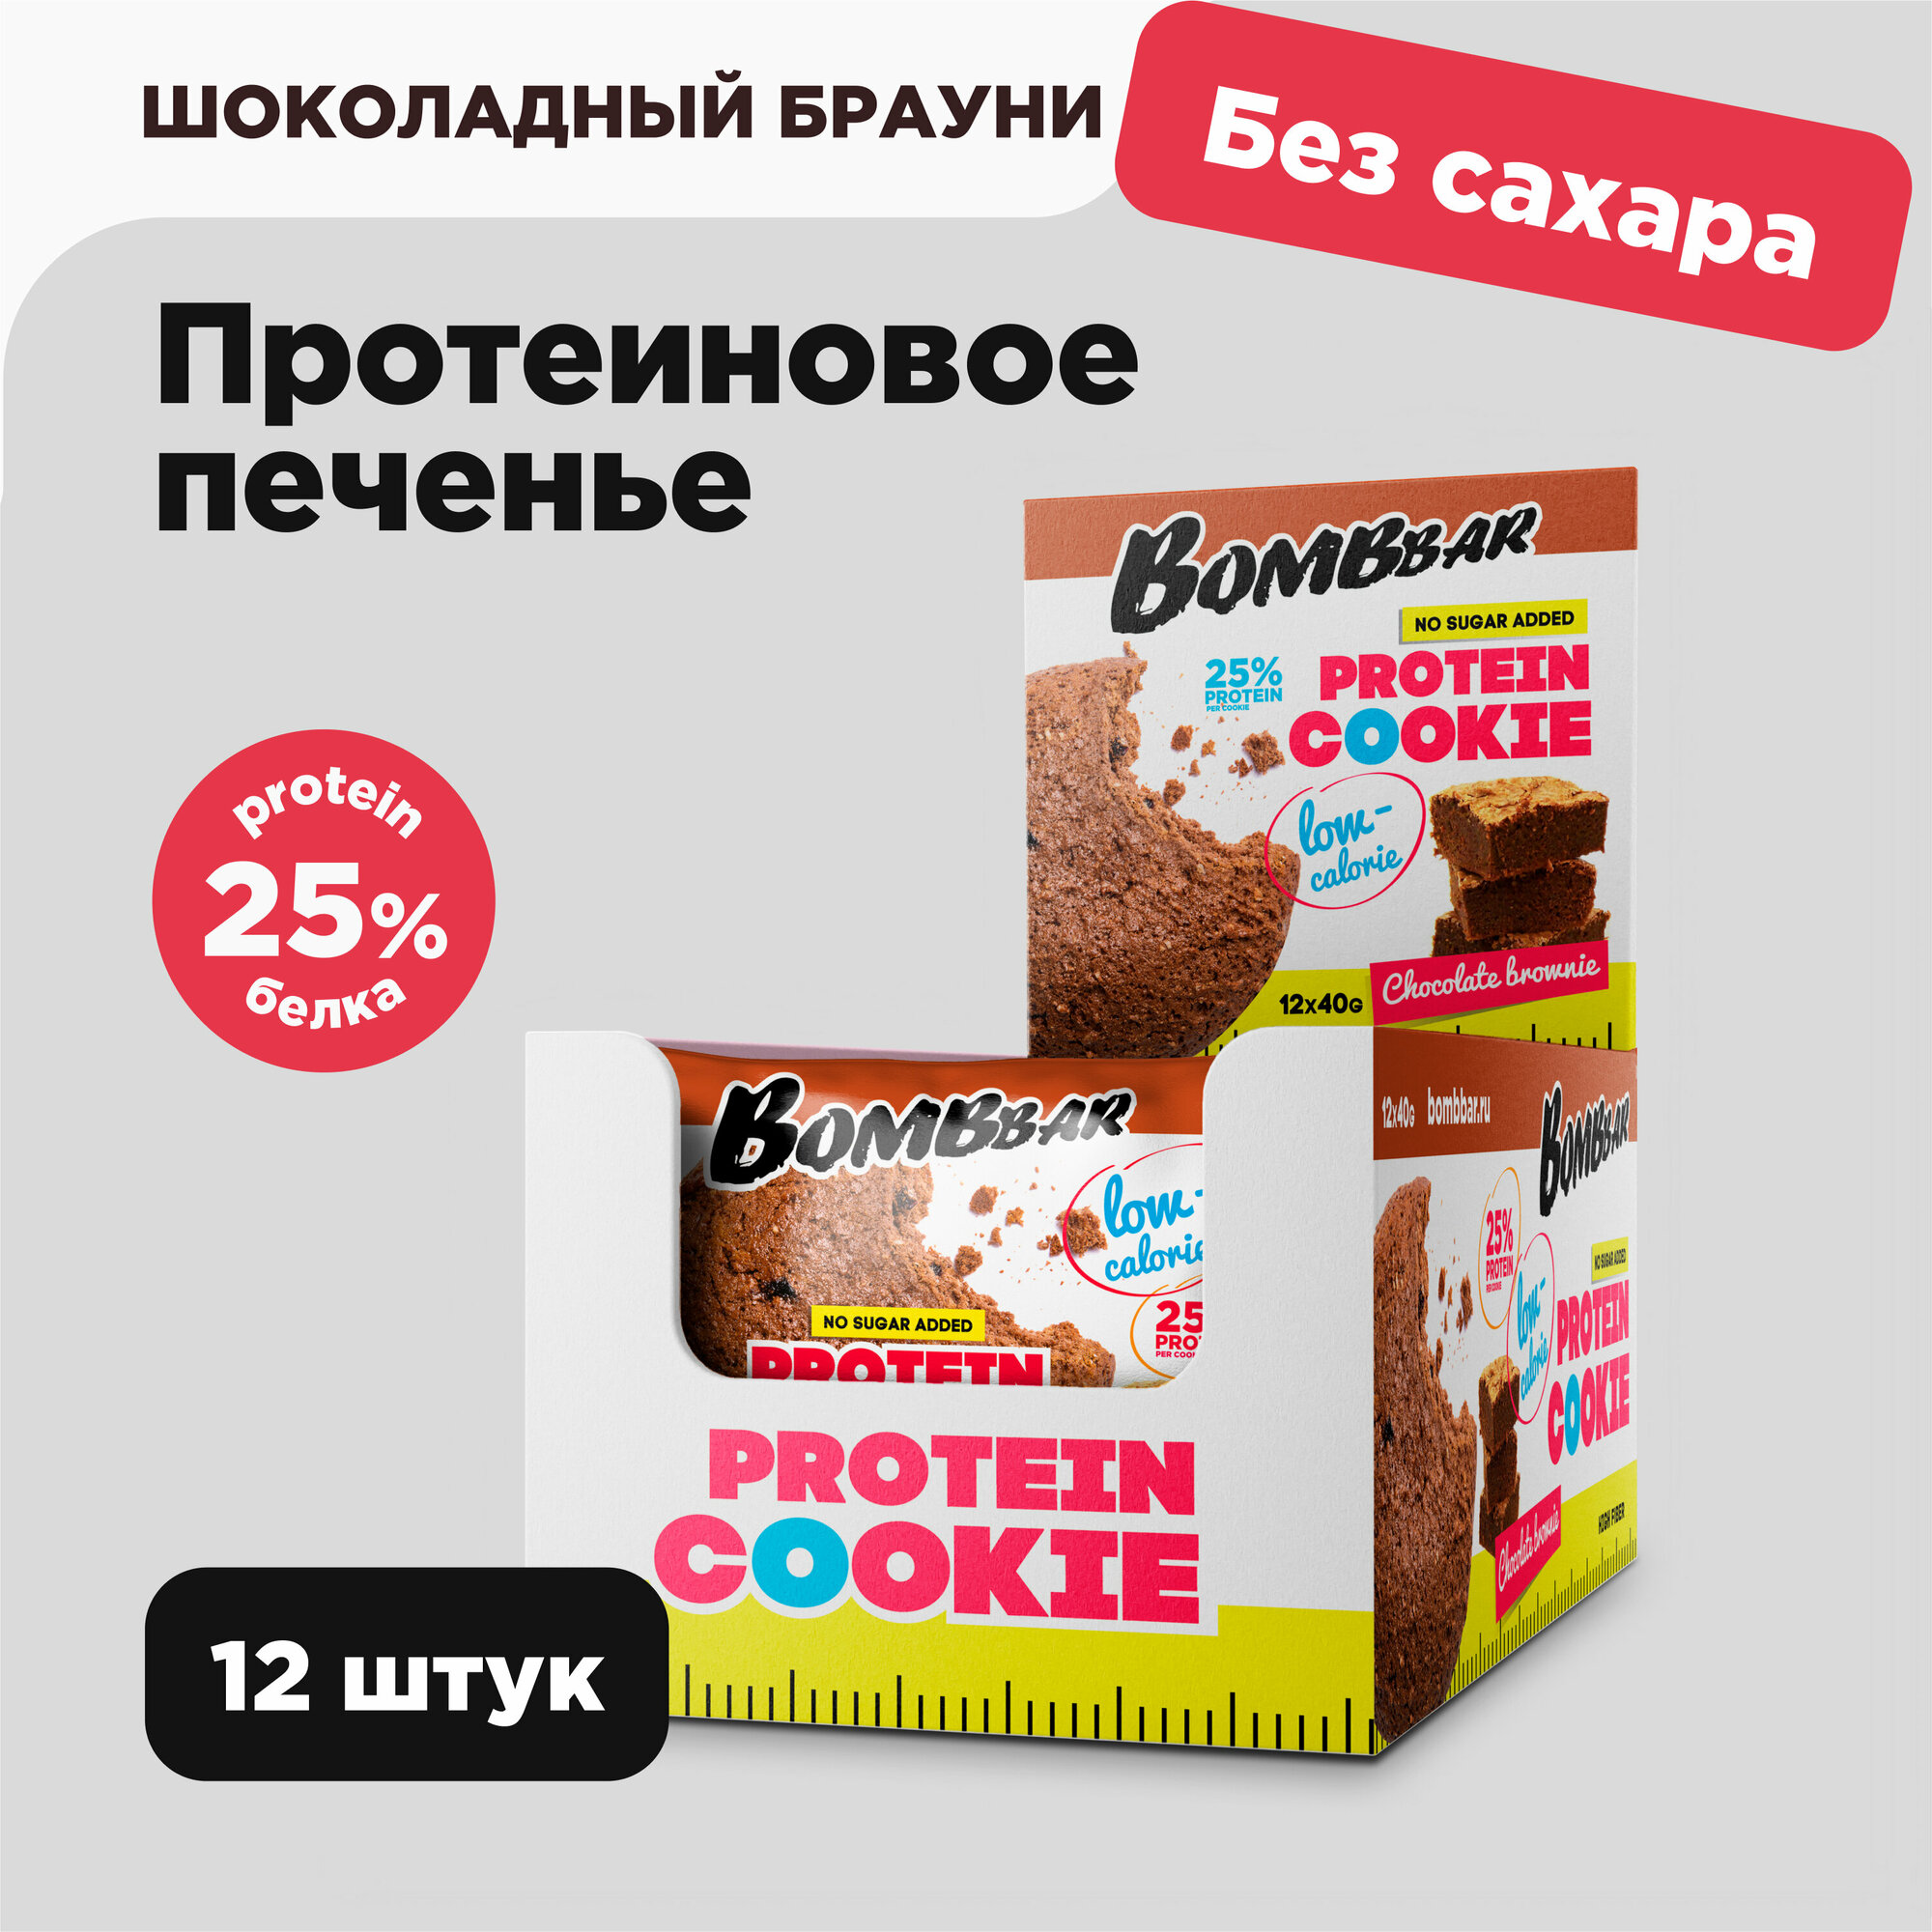 Низкокалорийное протеиновое печенье Bombbar Protein Cookie без сахара "Шоколадный Брауни", 12шт х 40г